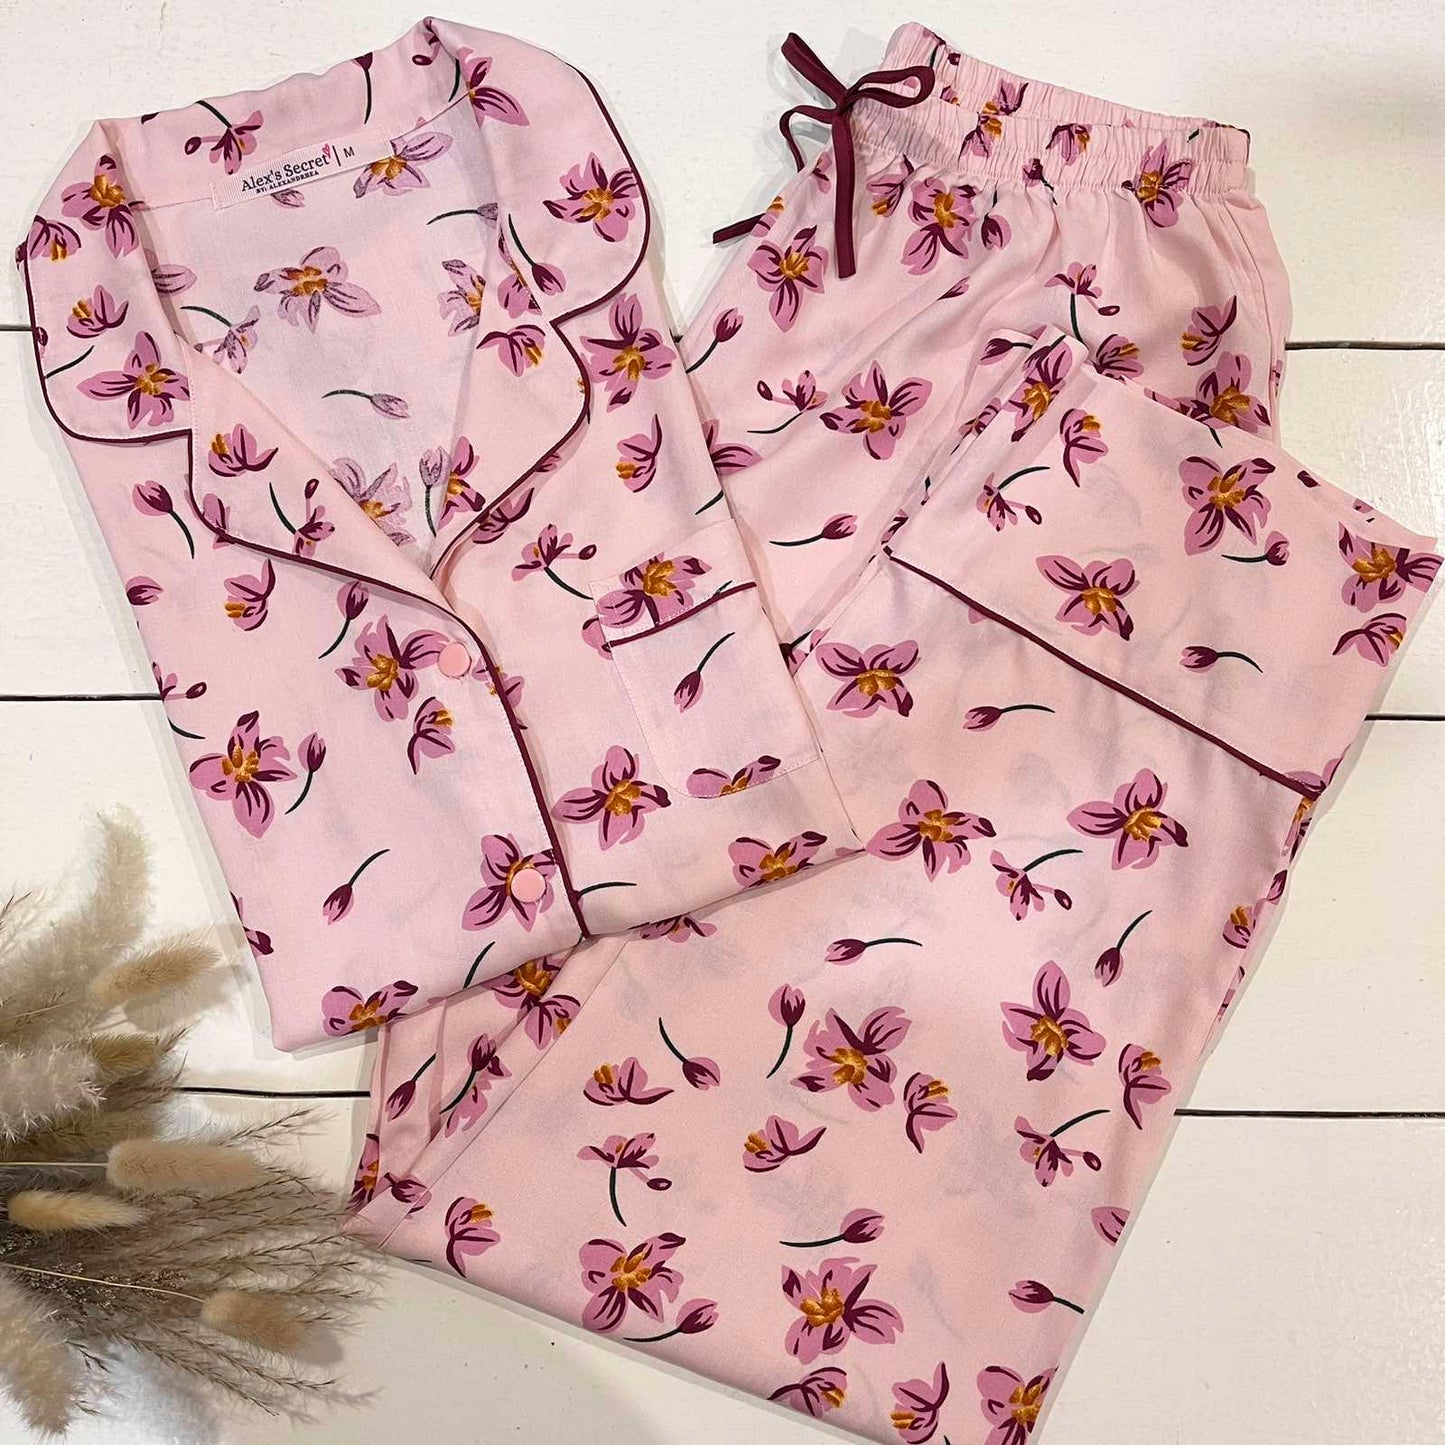 Alex's Secret Blush Pink Set - Pajama Style